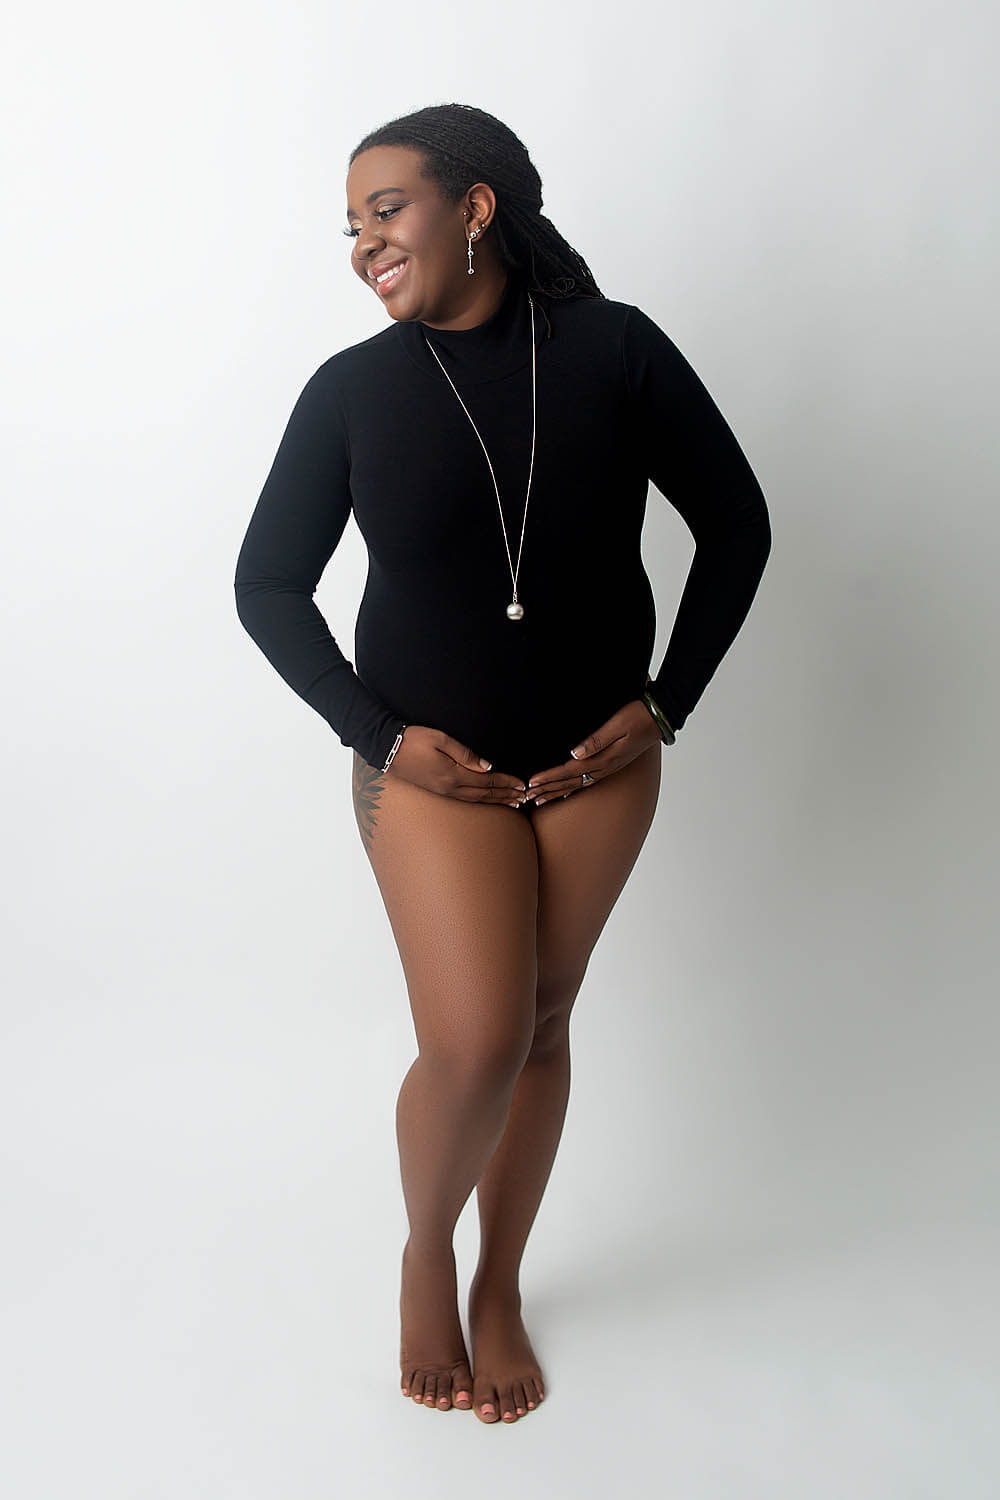 black women wearing bodysuit in studio maternity in davie, FL